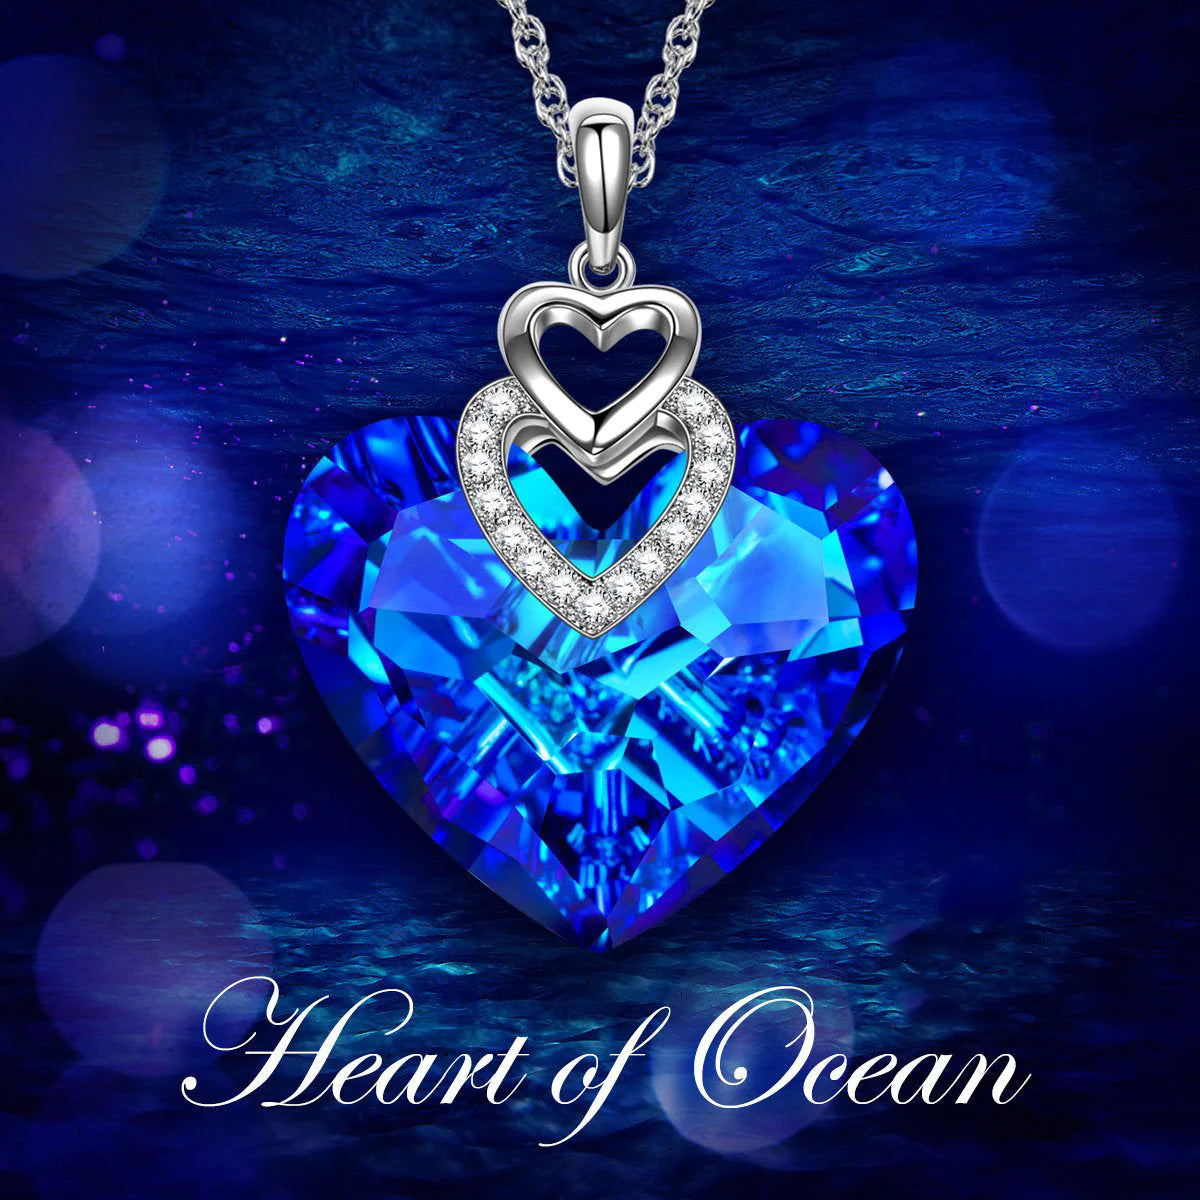 "Captivating Heart of the Ocean Necklace: Exquisite Rhodium Plating"